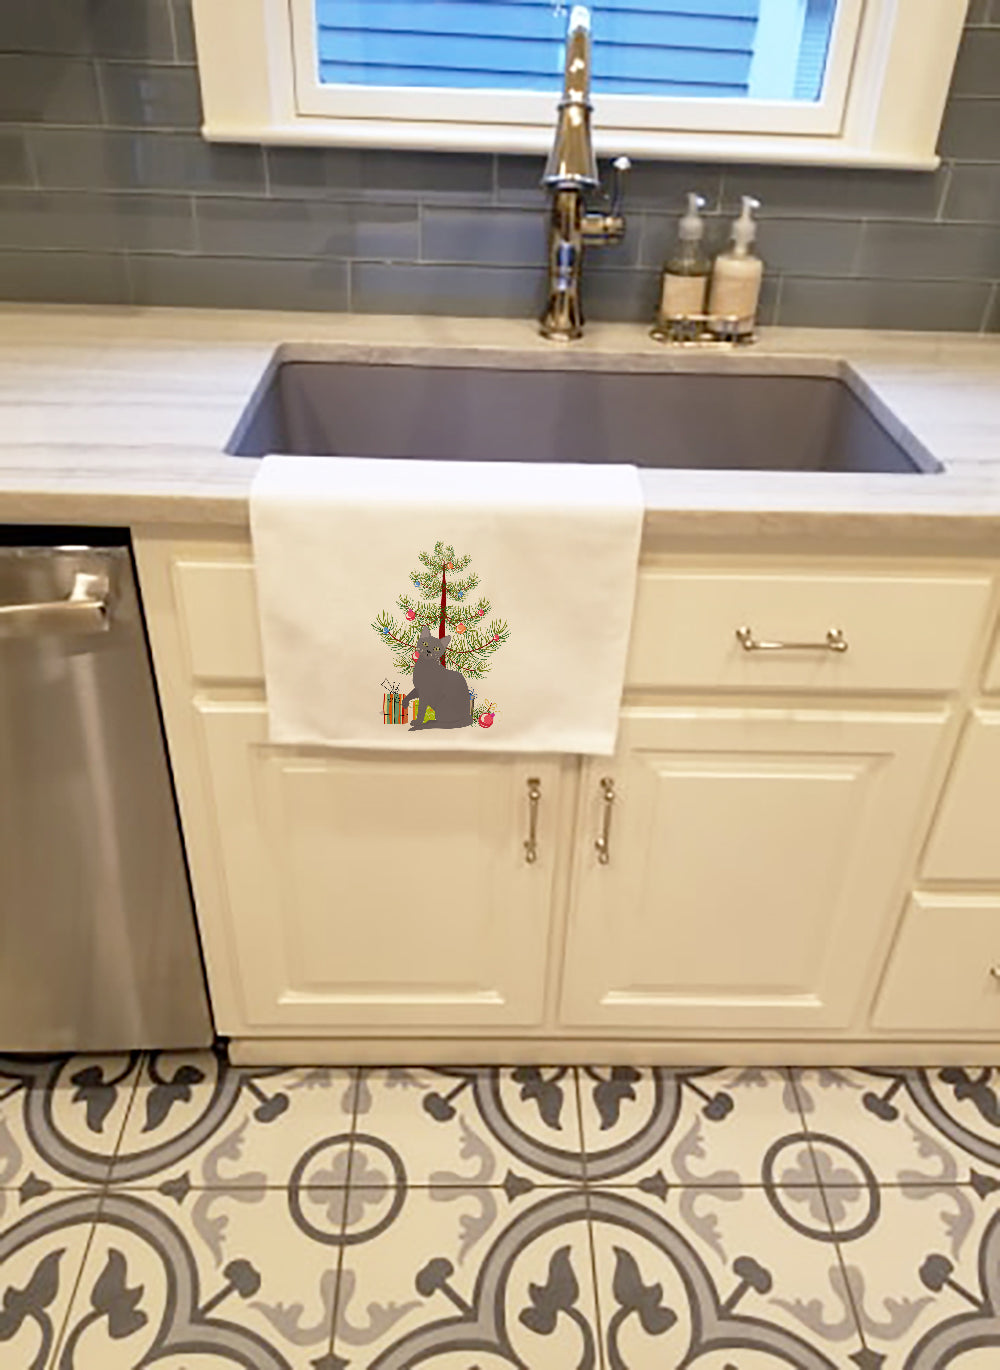 Buy this Korat Cat Merry Christmas White Kitchen Towel Set of 2